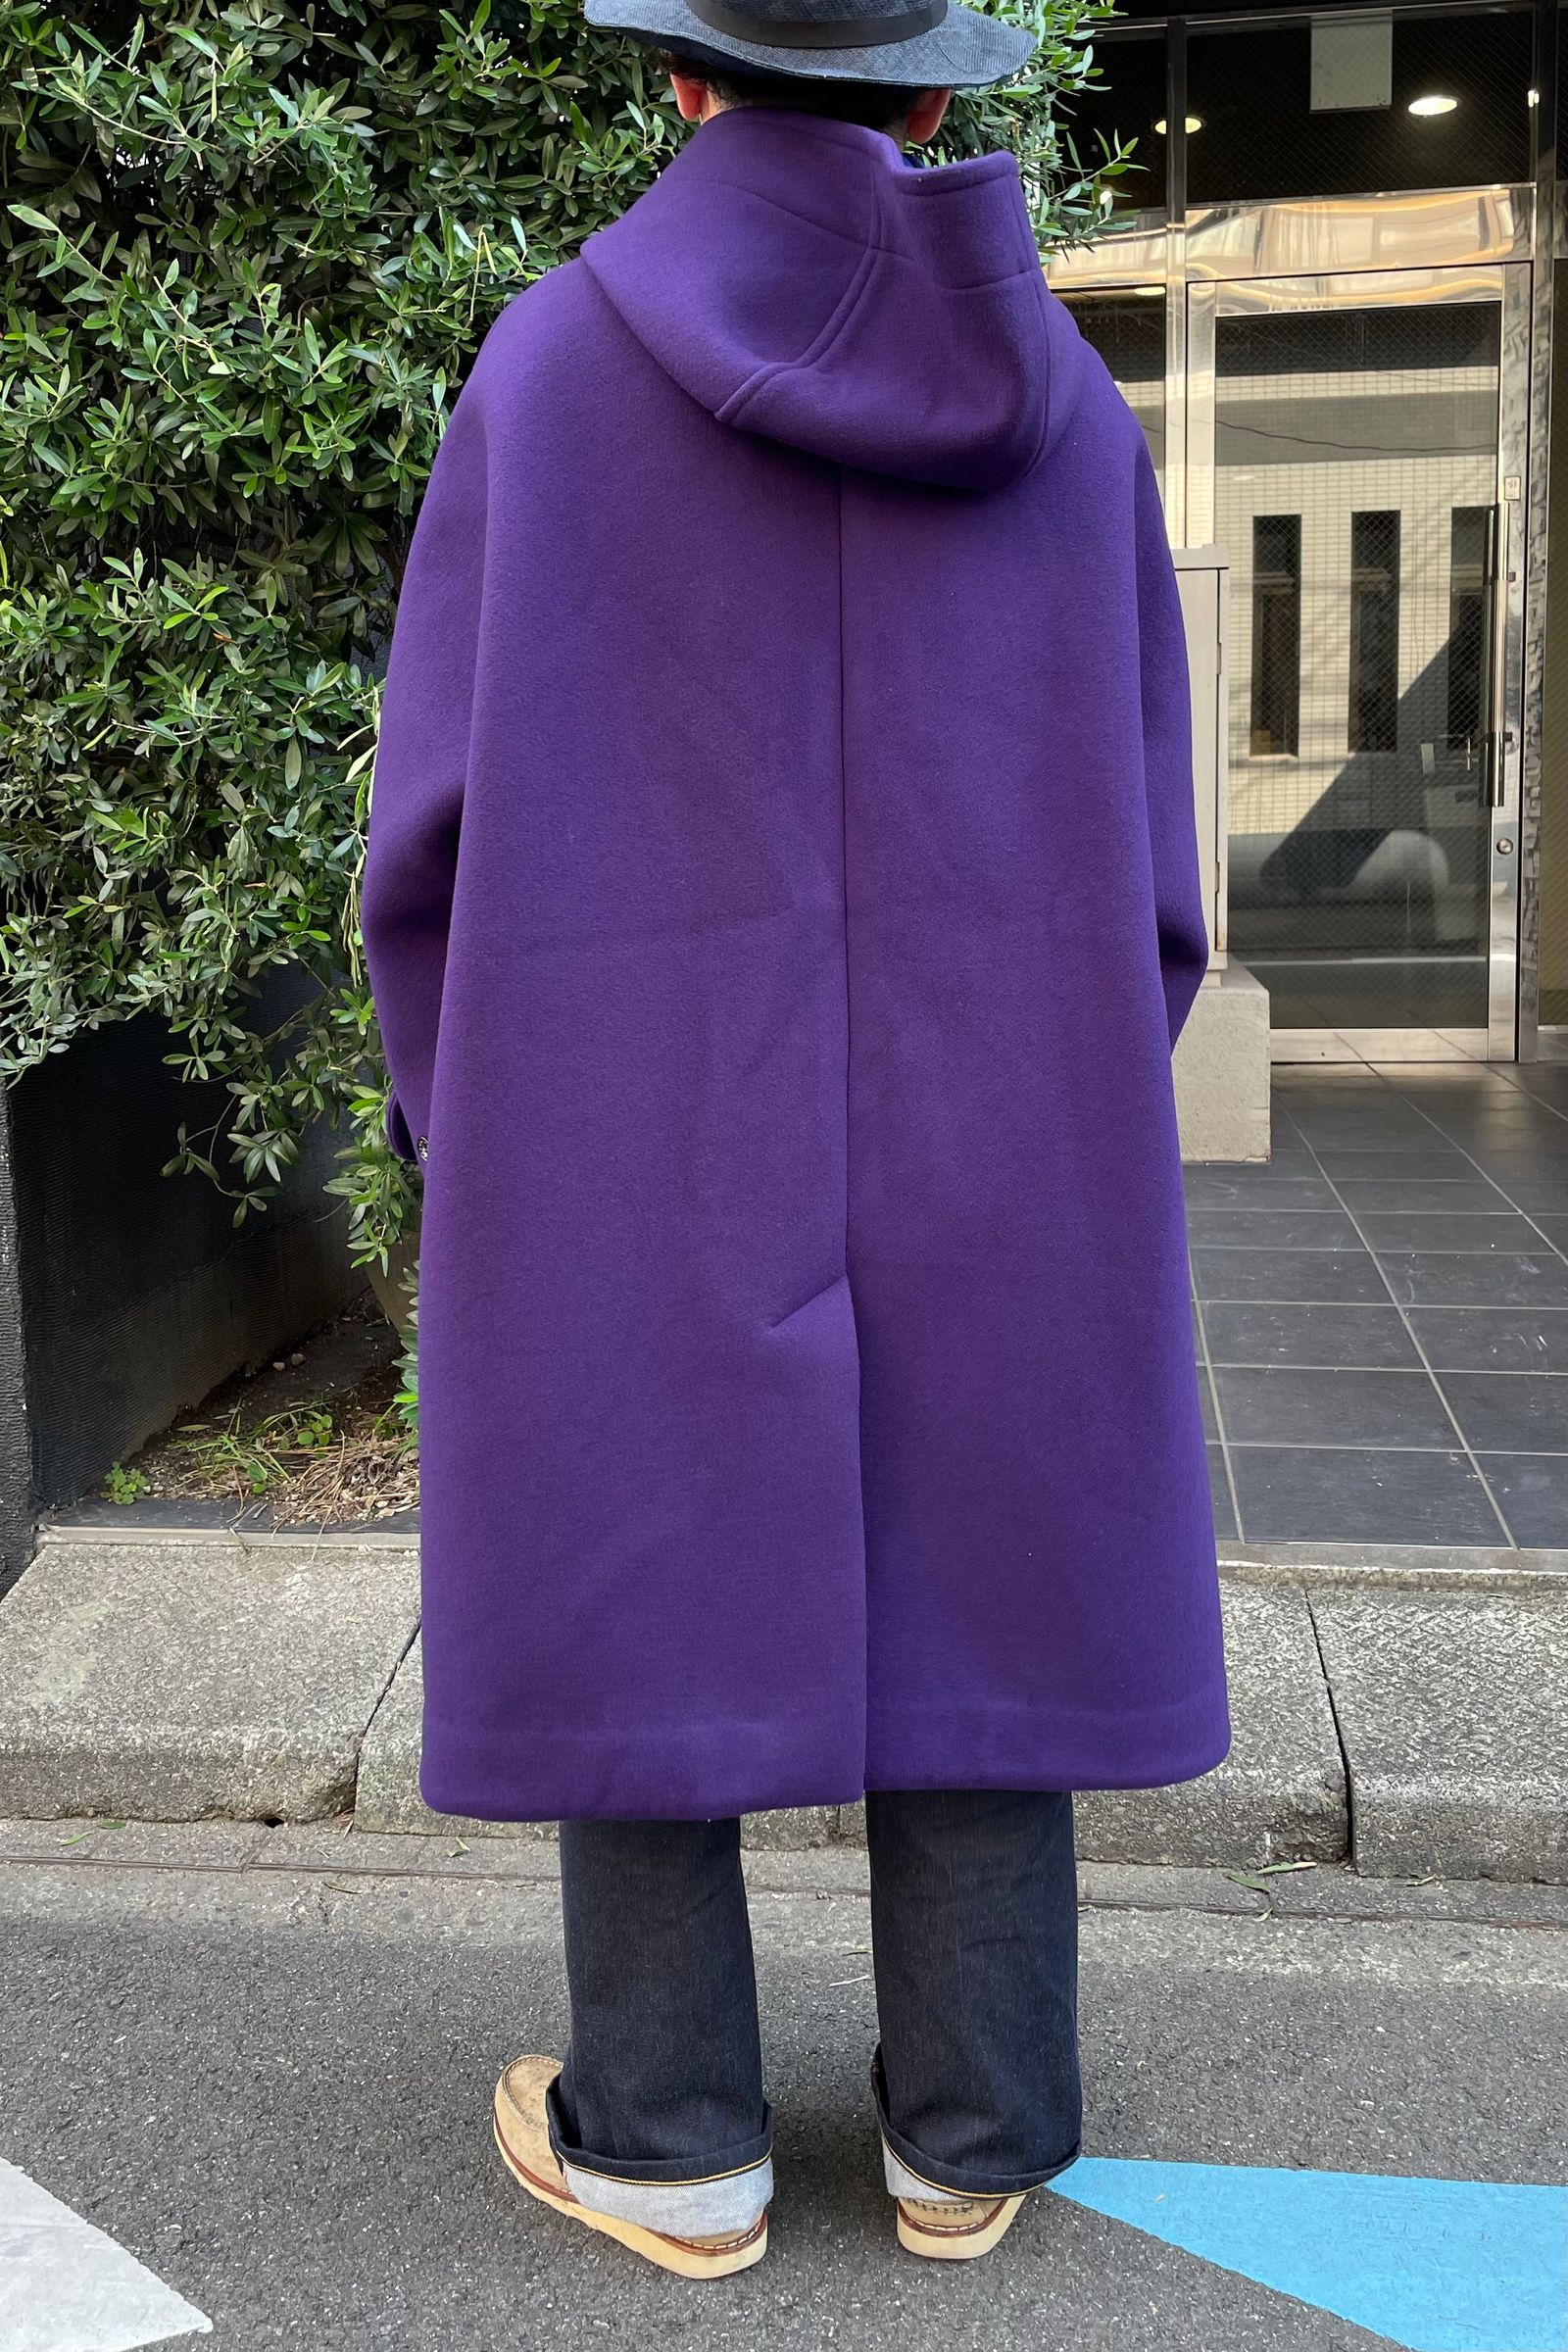 FUMITO GANRYU - vintage modern duffle coat -purple- 22aw | asterisk